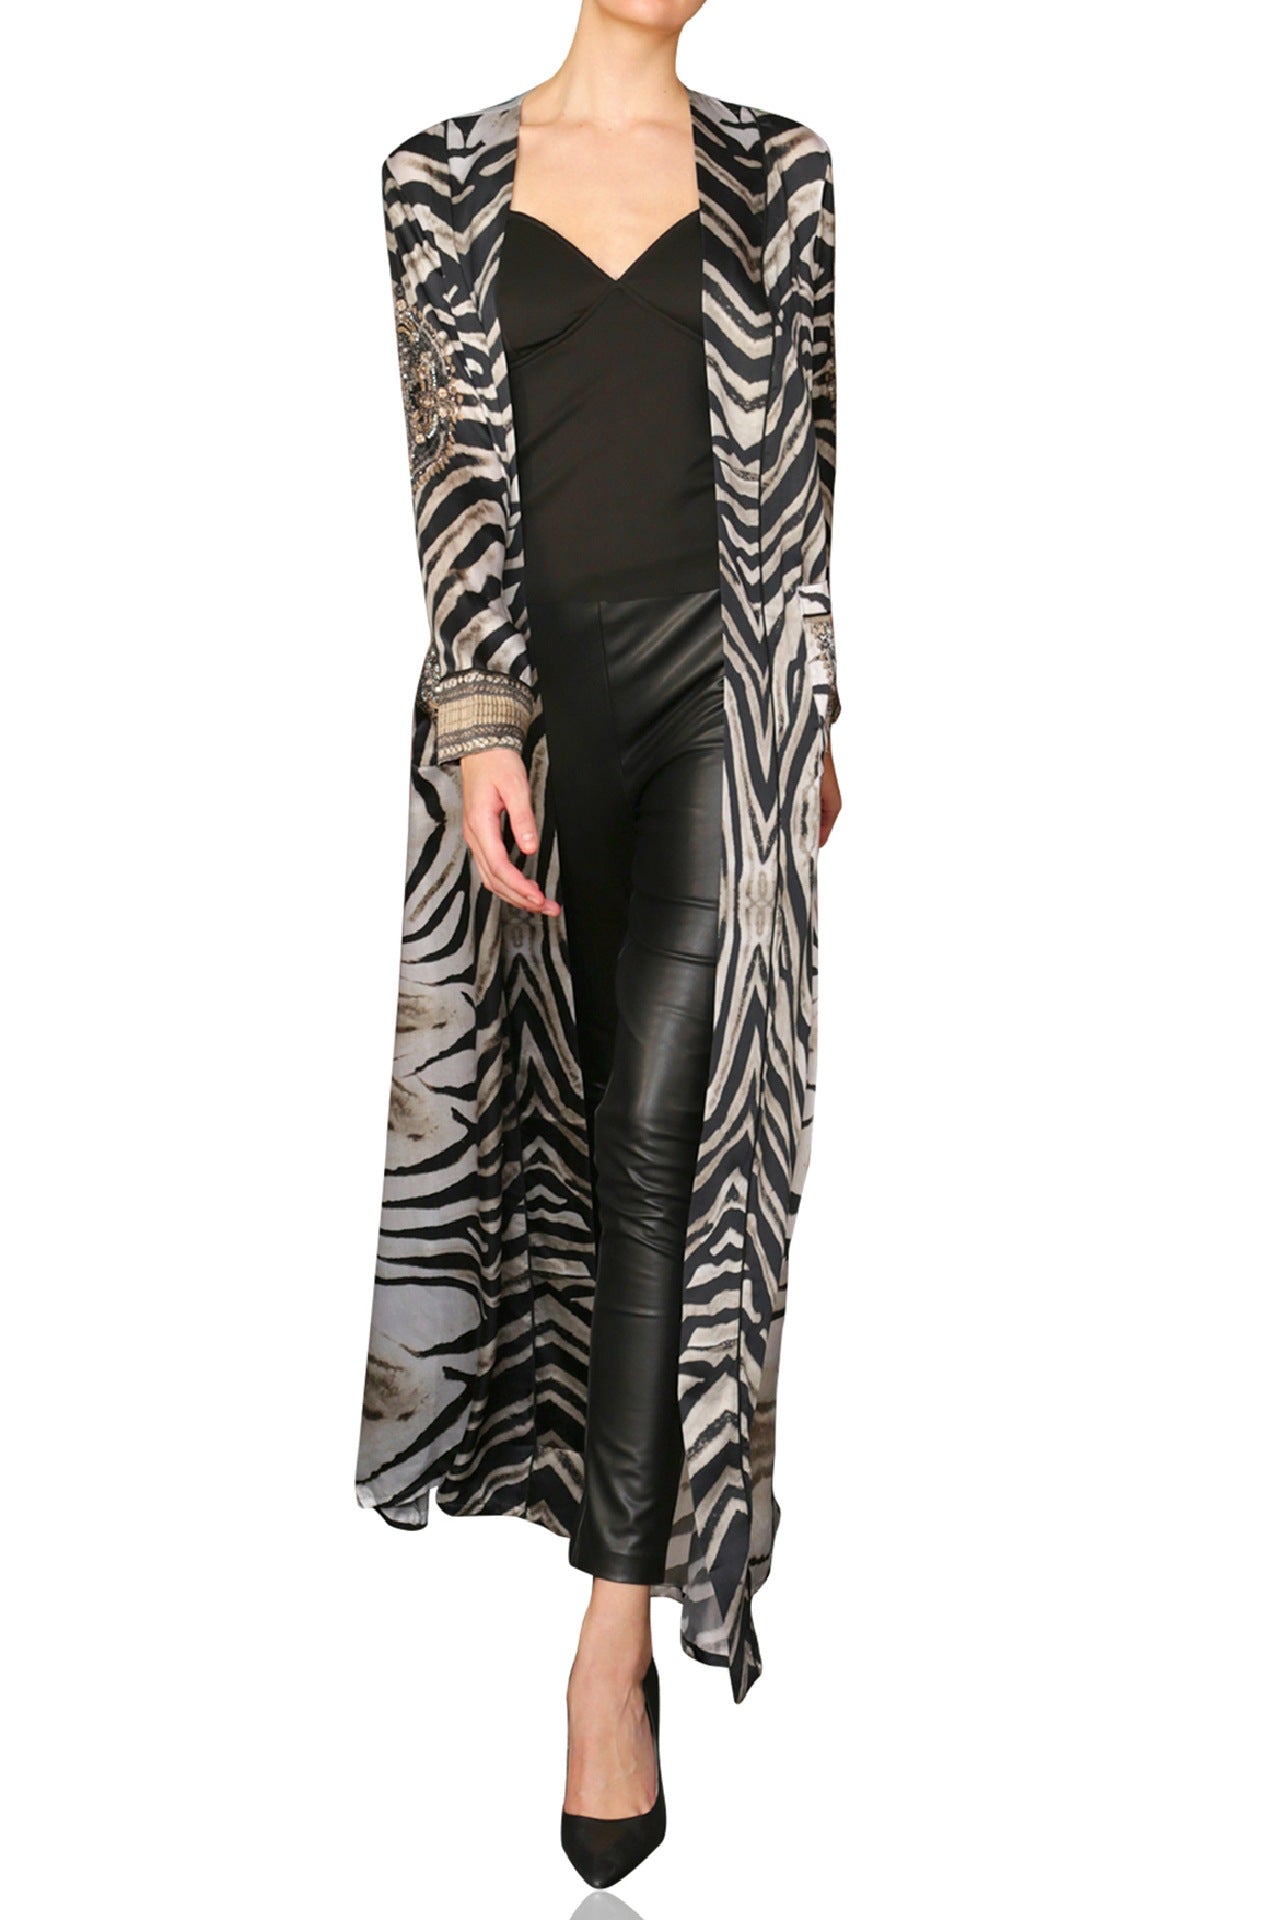 "zebra print robes" "robe dress silk," "Kyle X Shahida" "kimono print" 